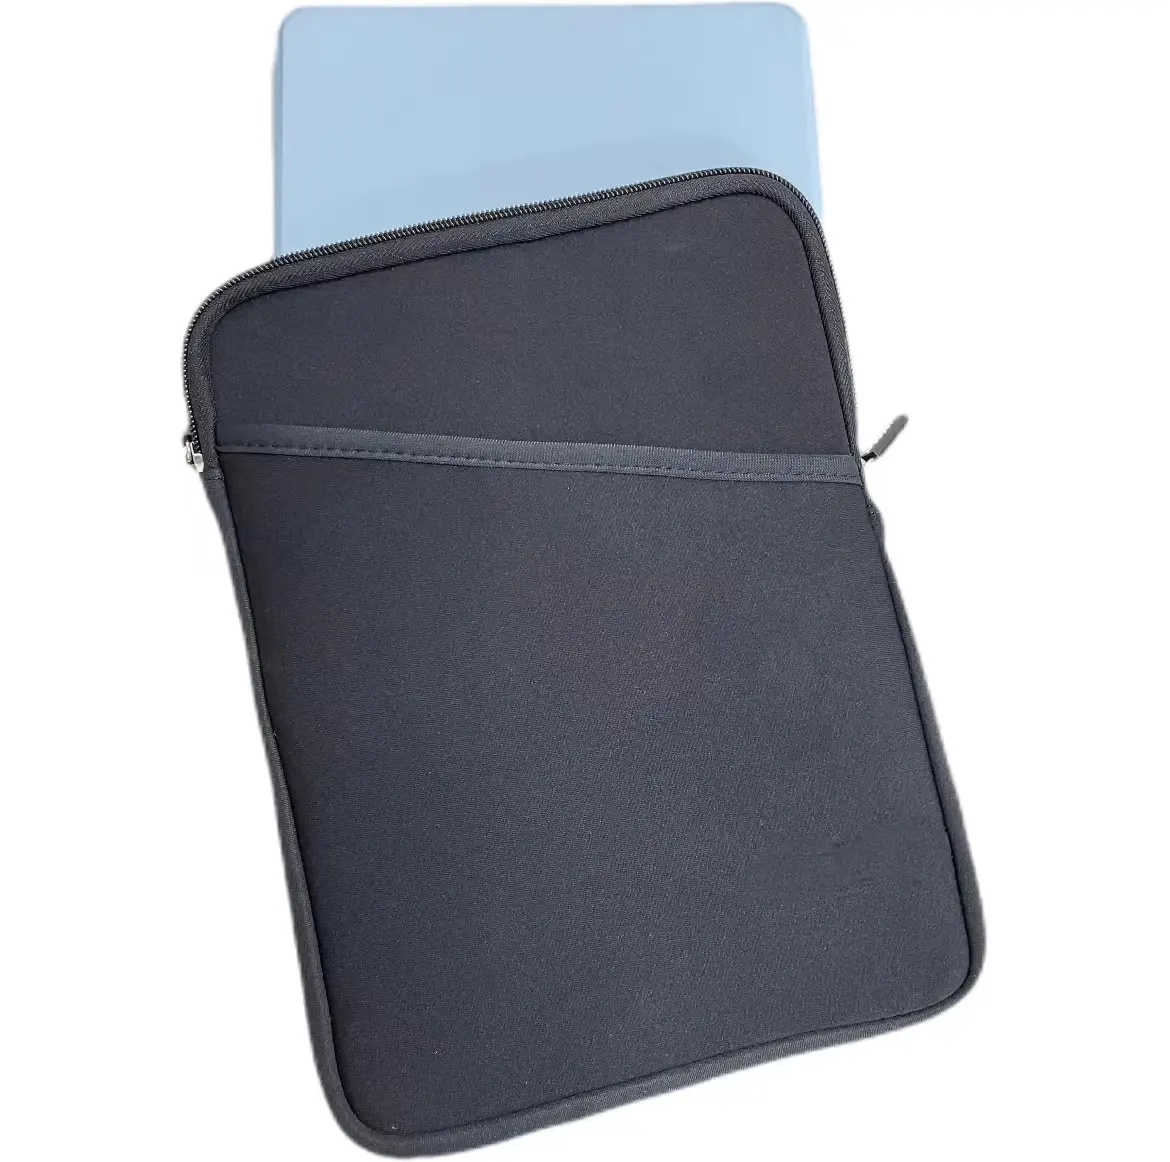 Leve Multifuncional Portátil Laptop Bags & Covers Notebook Teclado Do Computador Armazenamento Saco Tablet Luva Protetora Caso